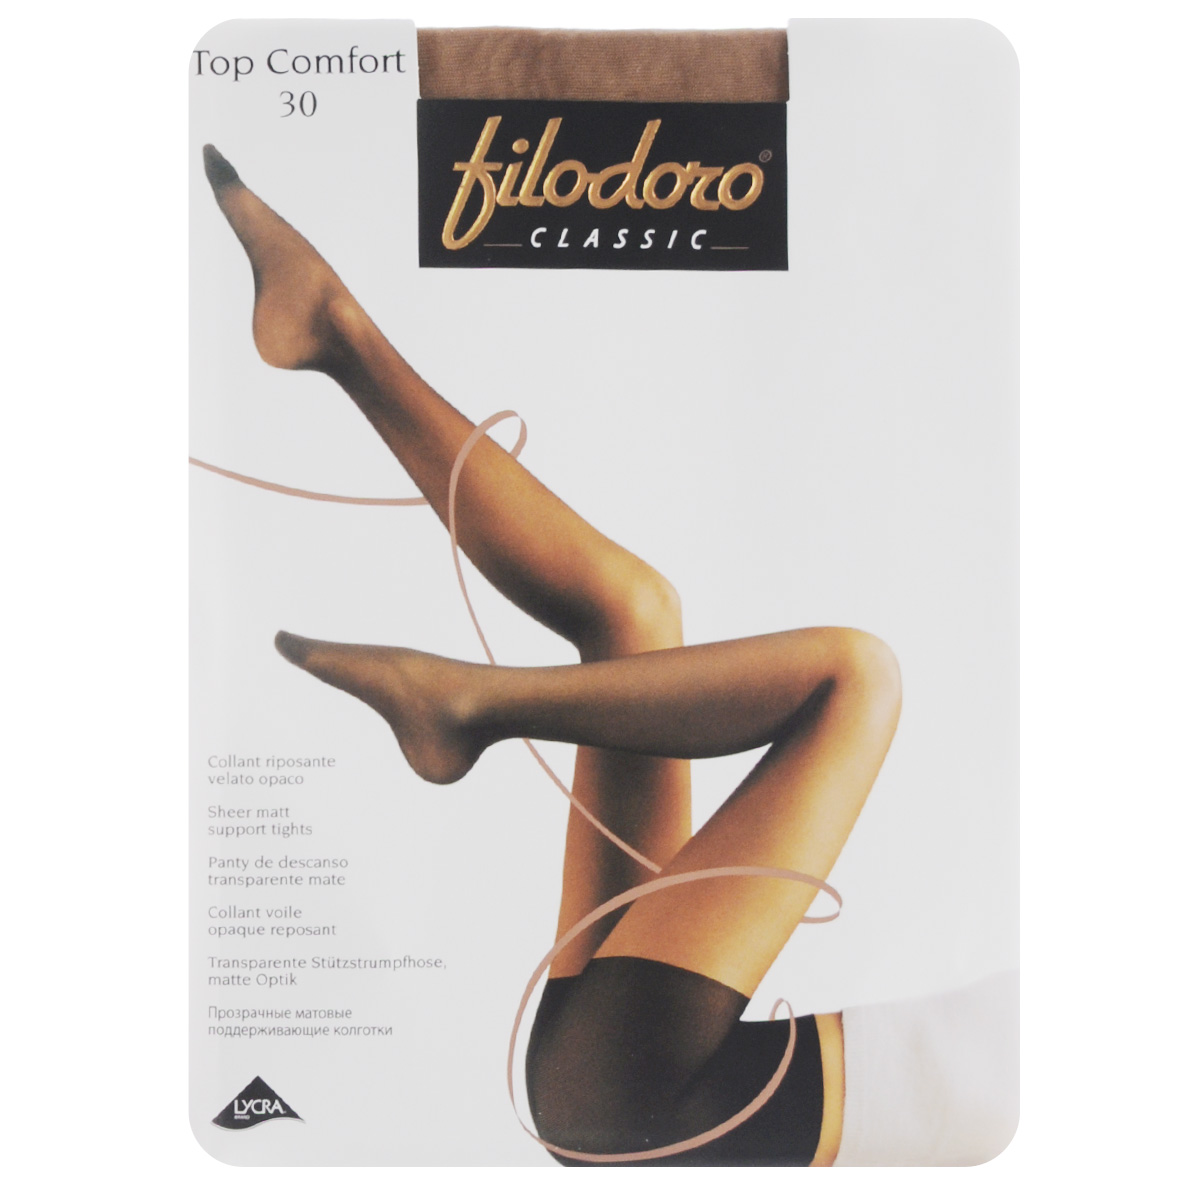 Колготки женские Filodoro Classic Top Comfort 30, цвет: Glace (коричневый). C109791FC. Размер 2 (S)